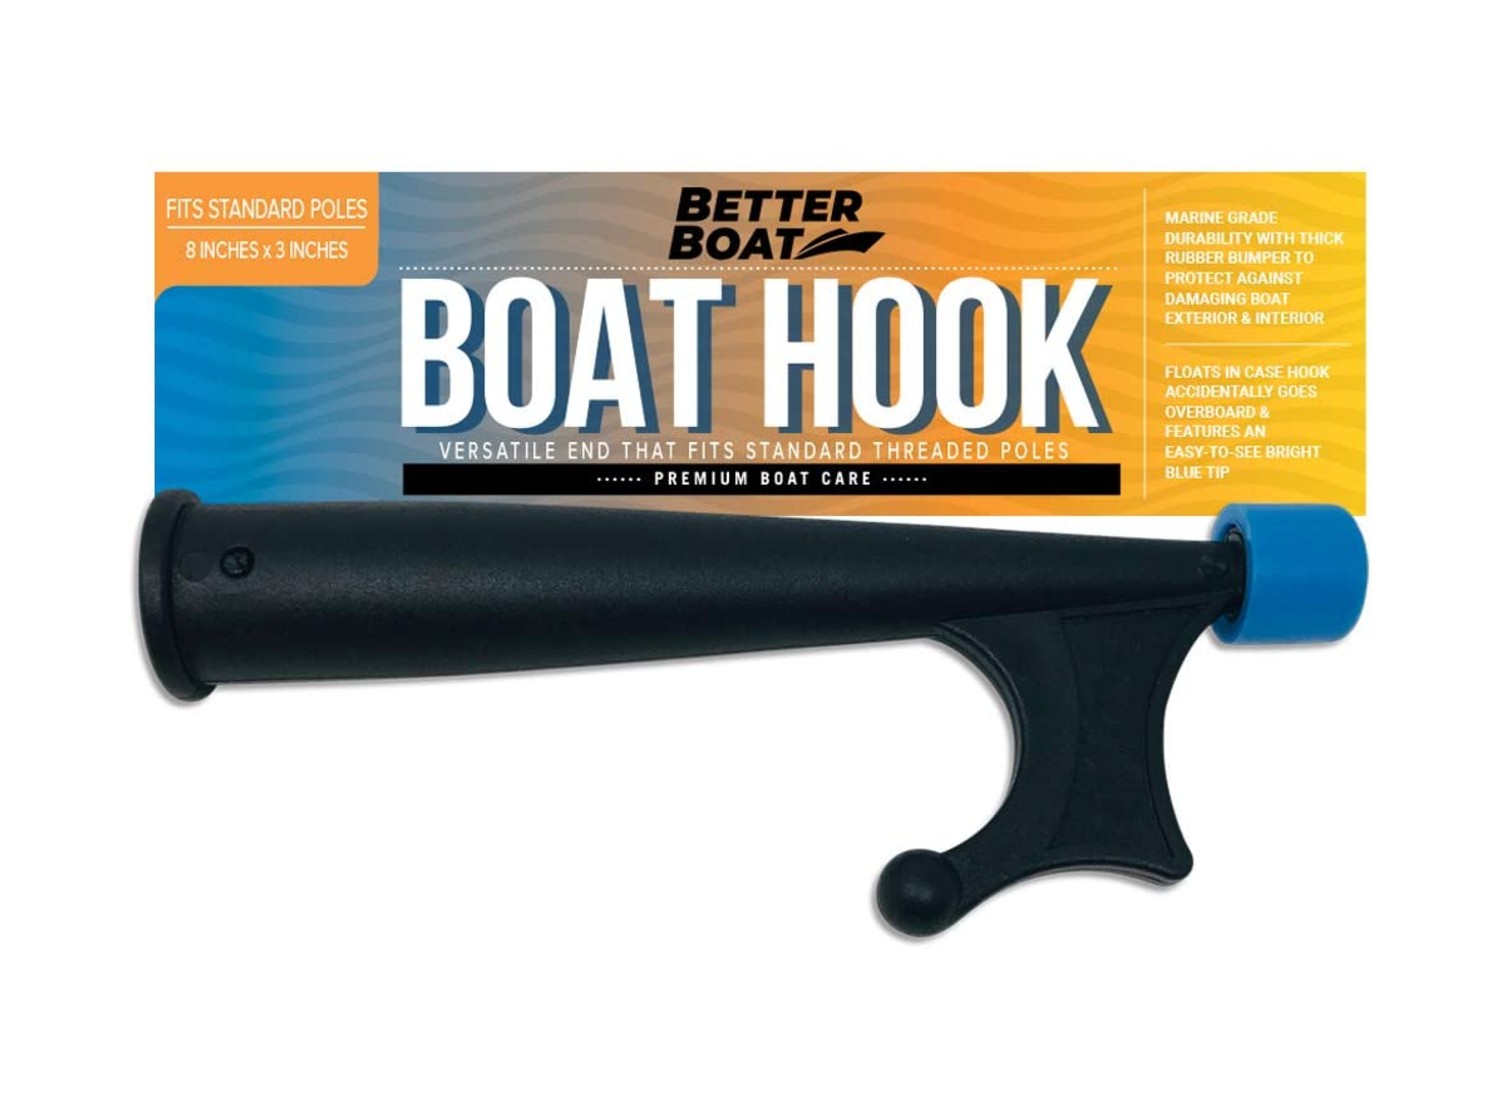 Boat Hook reviews